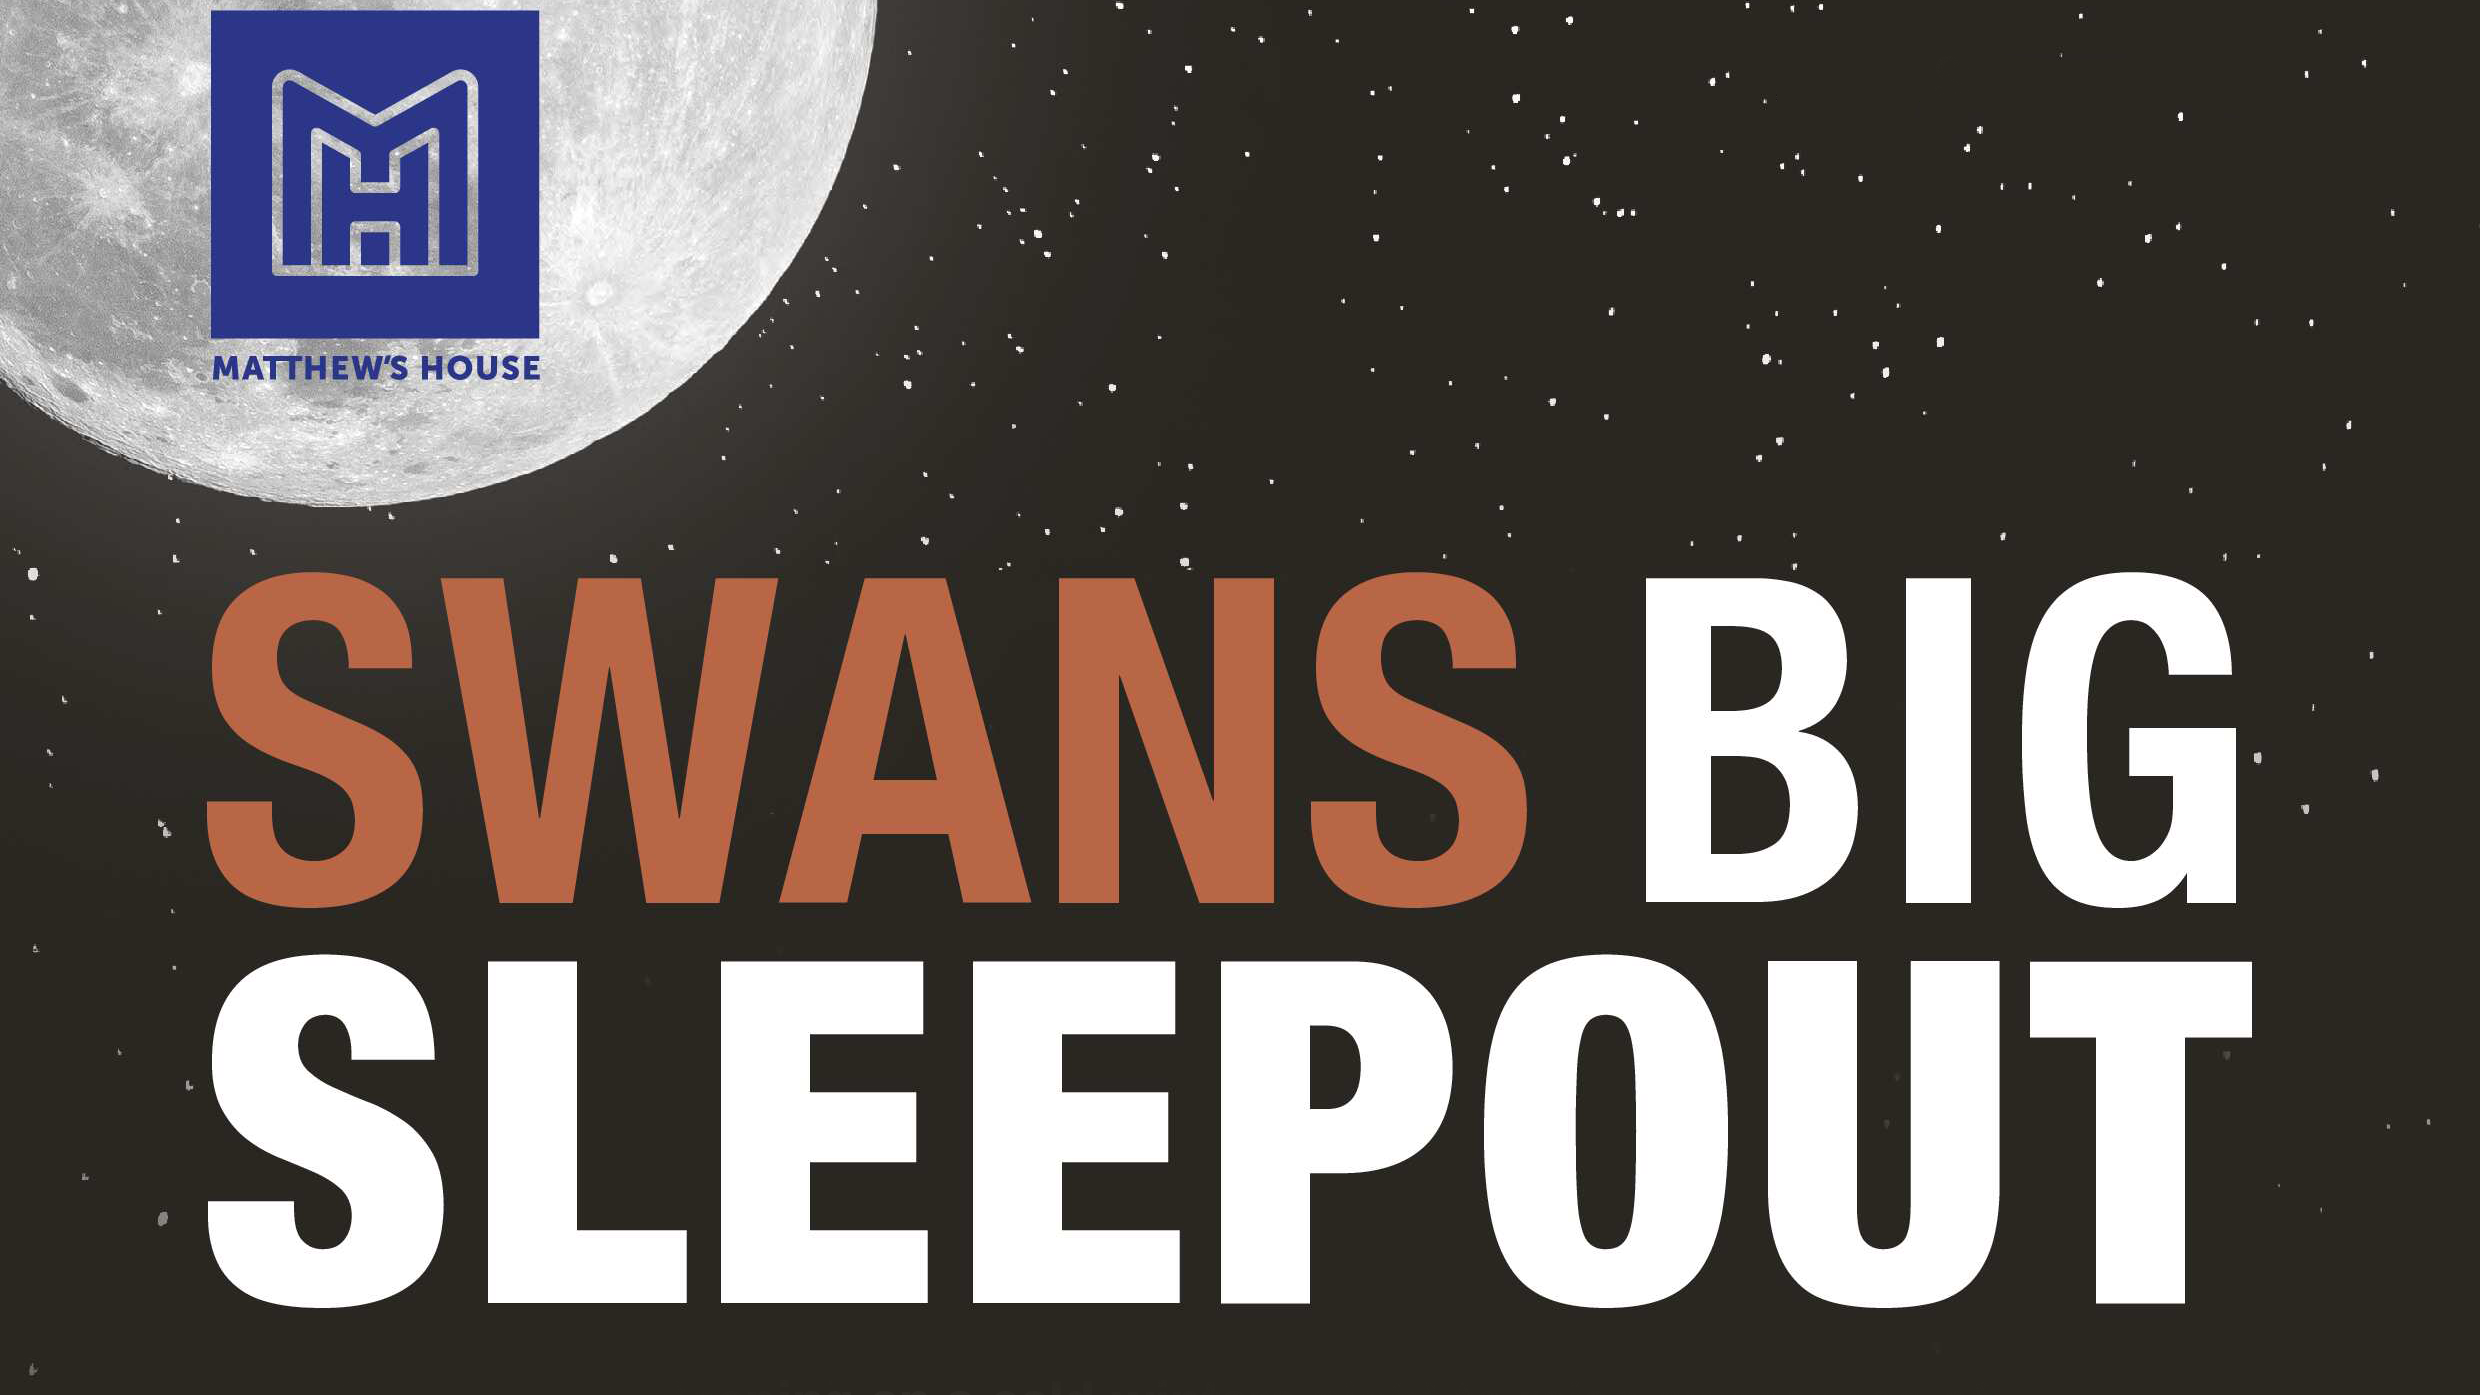 Swans Big Sleepout